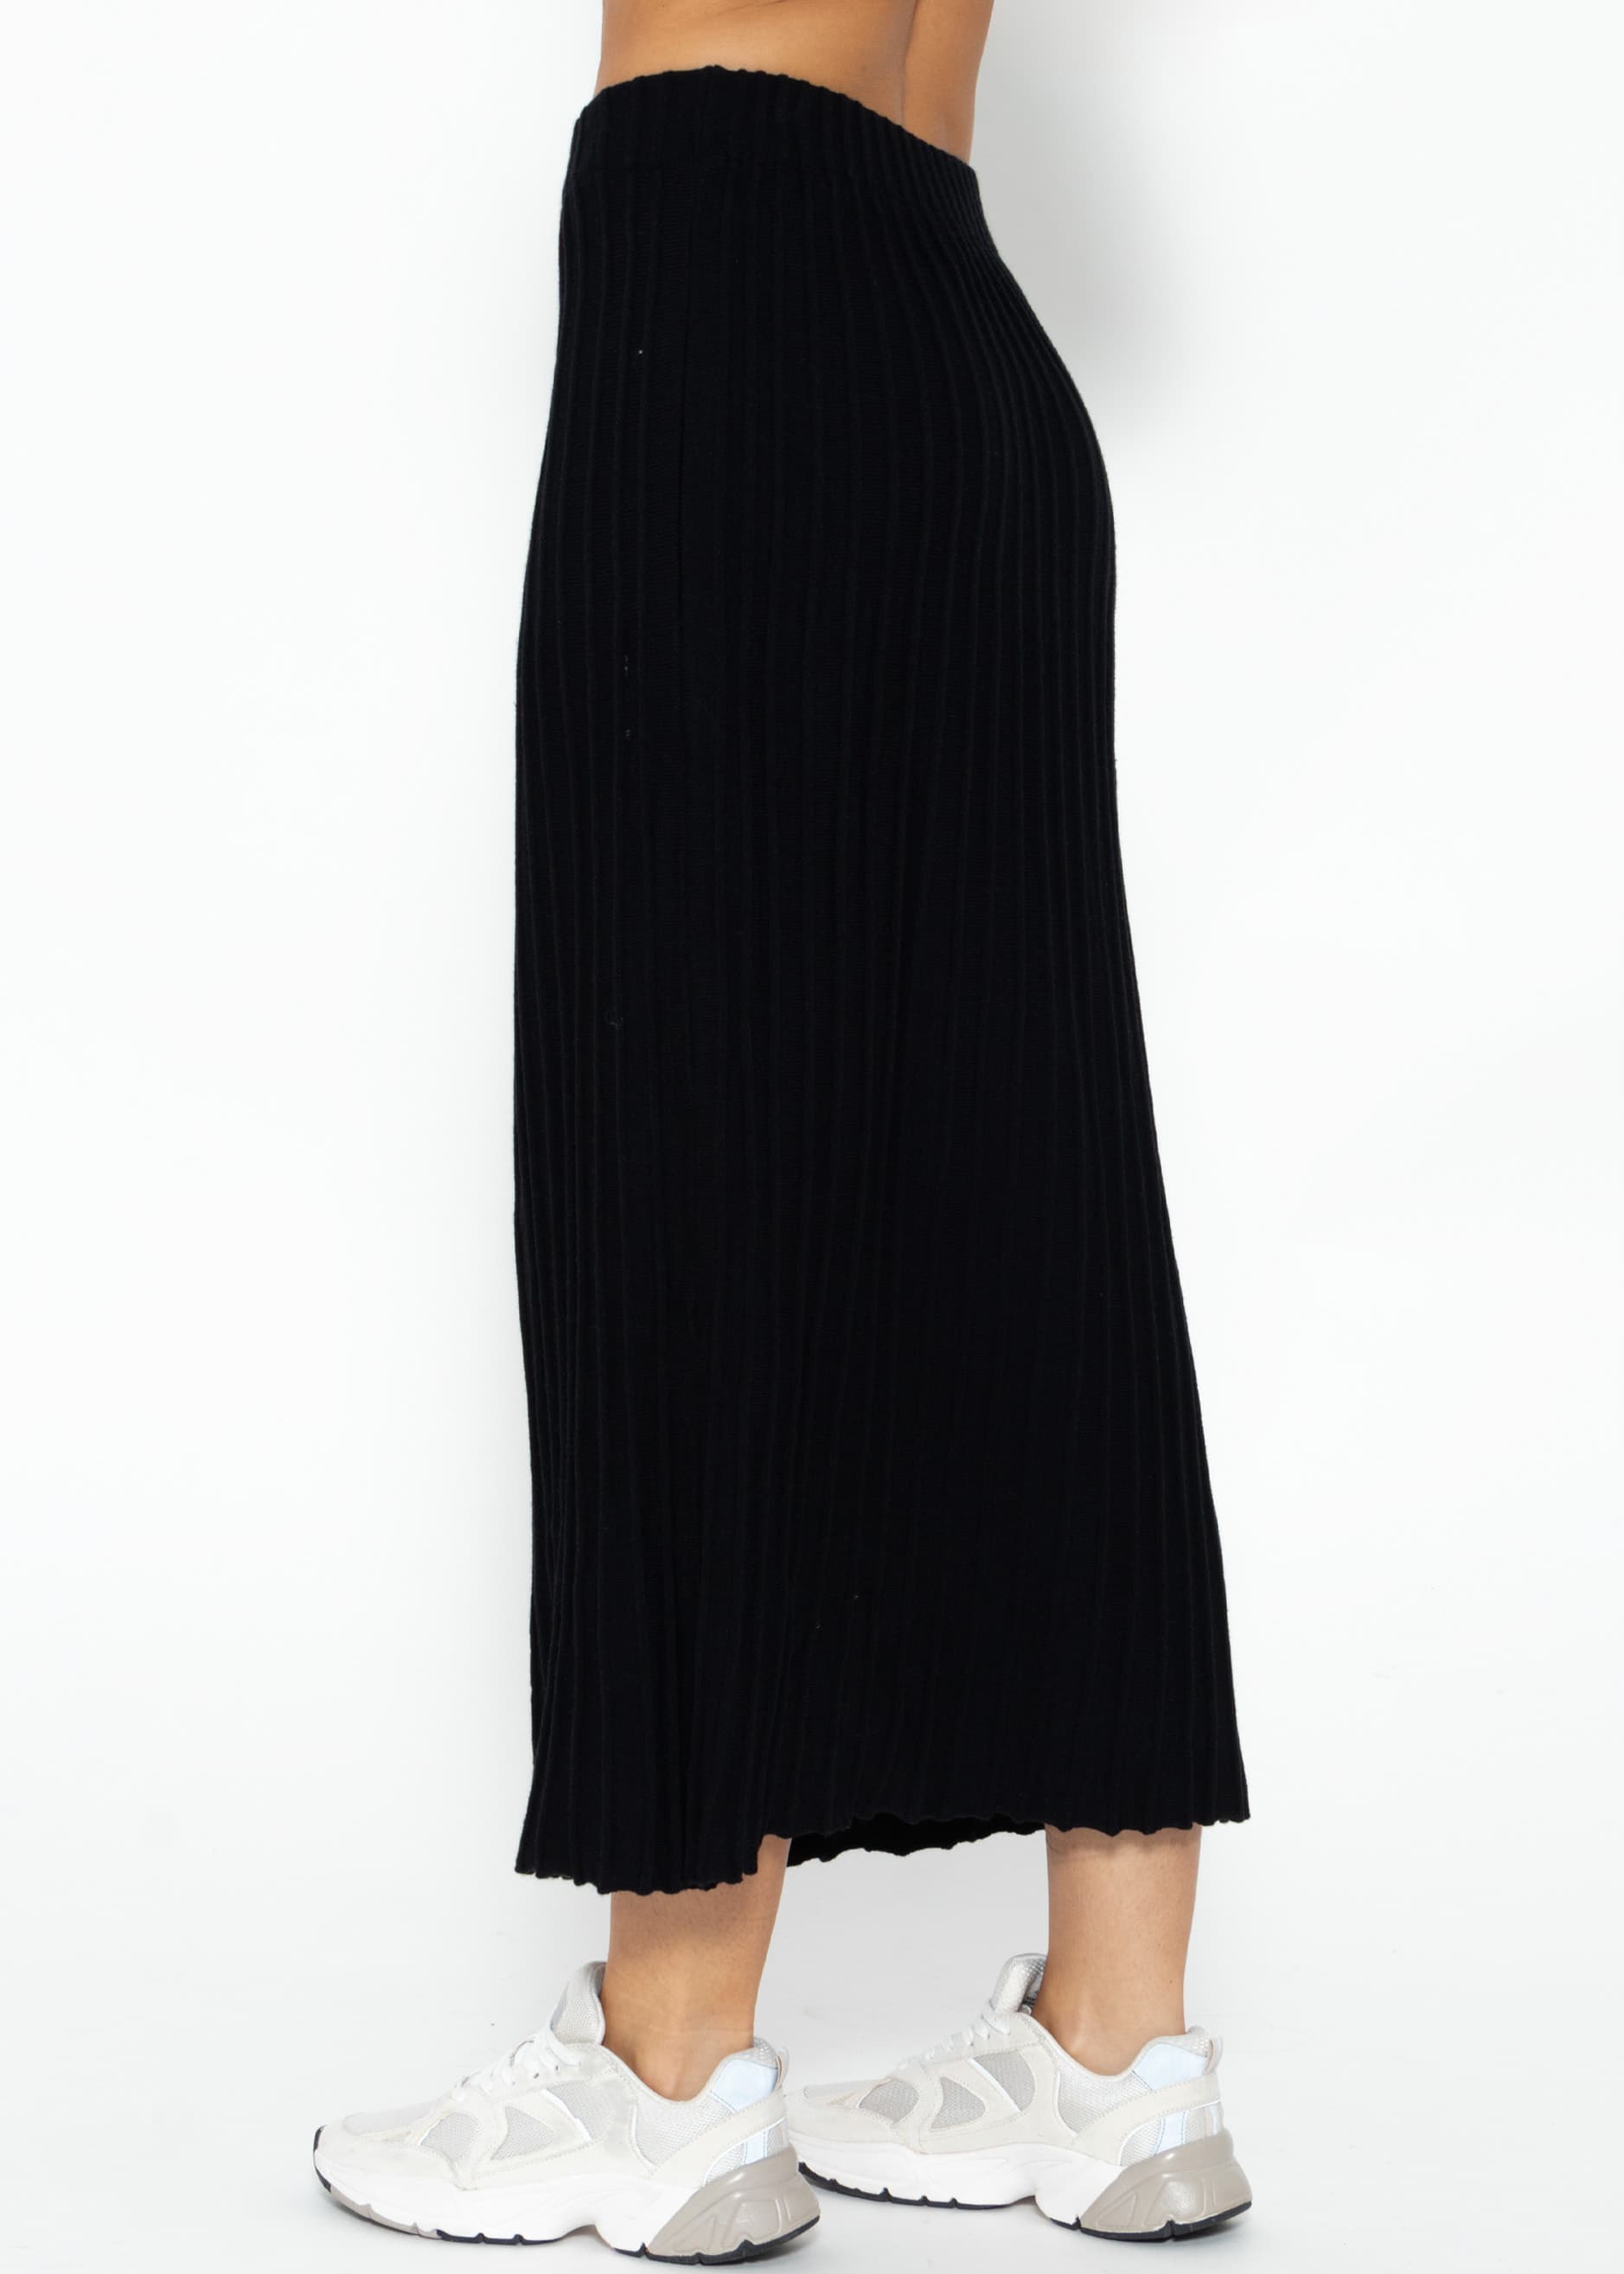 Buy U&F Black Pleated Maxi Flared Skirt at Amazon.in